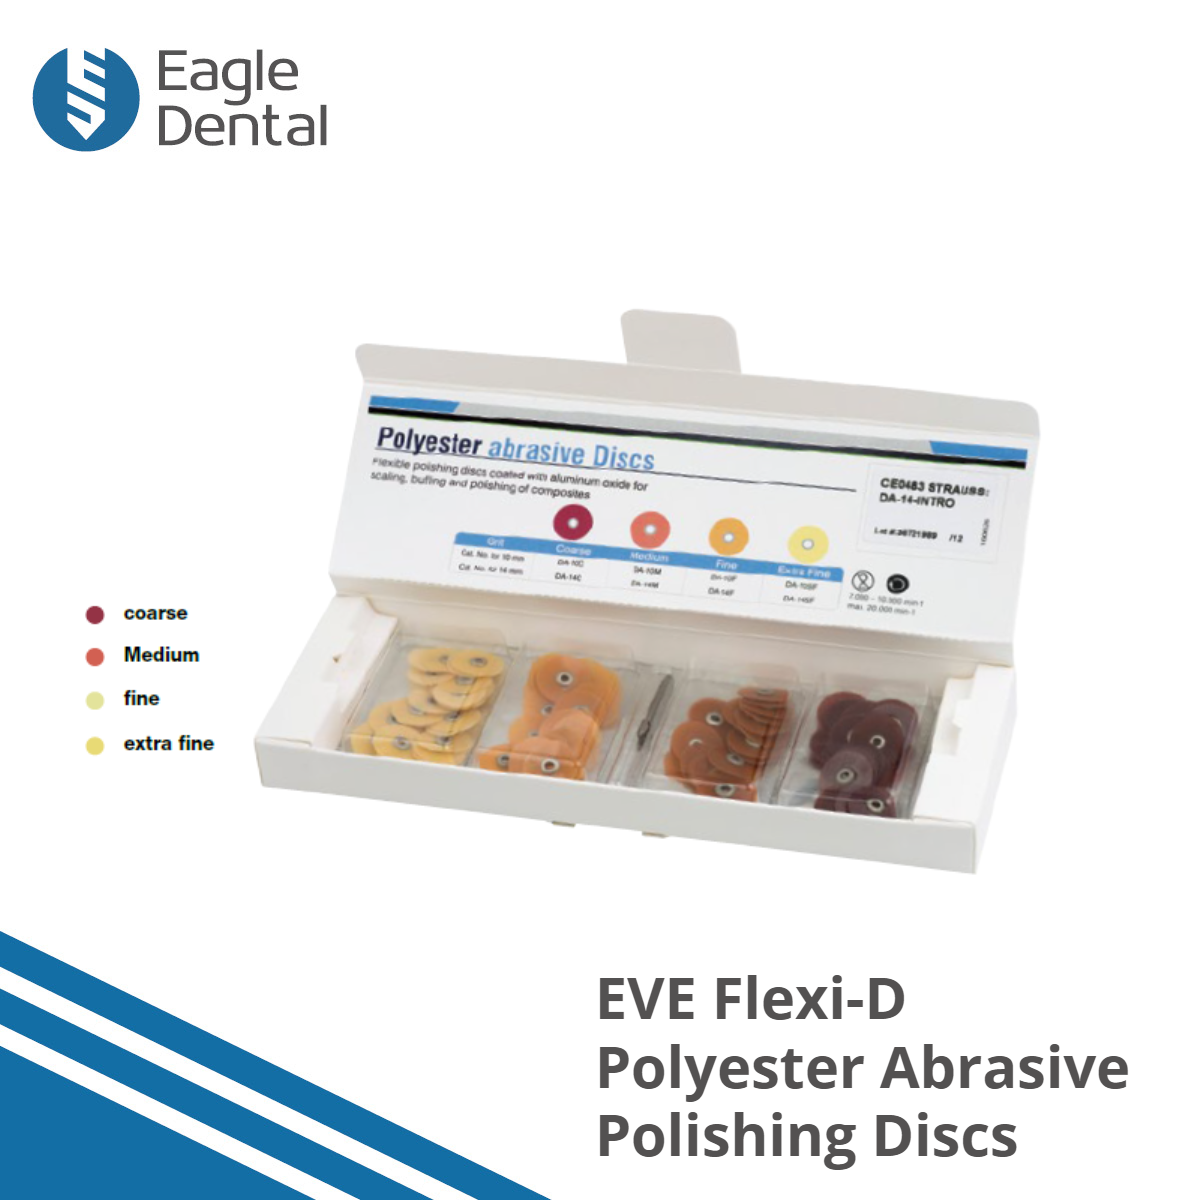 EVE Flexi-D Polyester Abrasive Discs